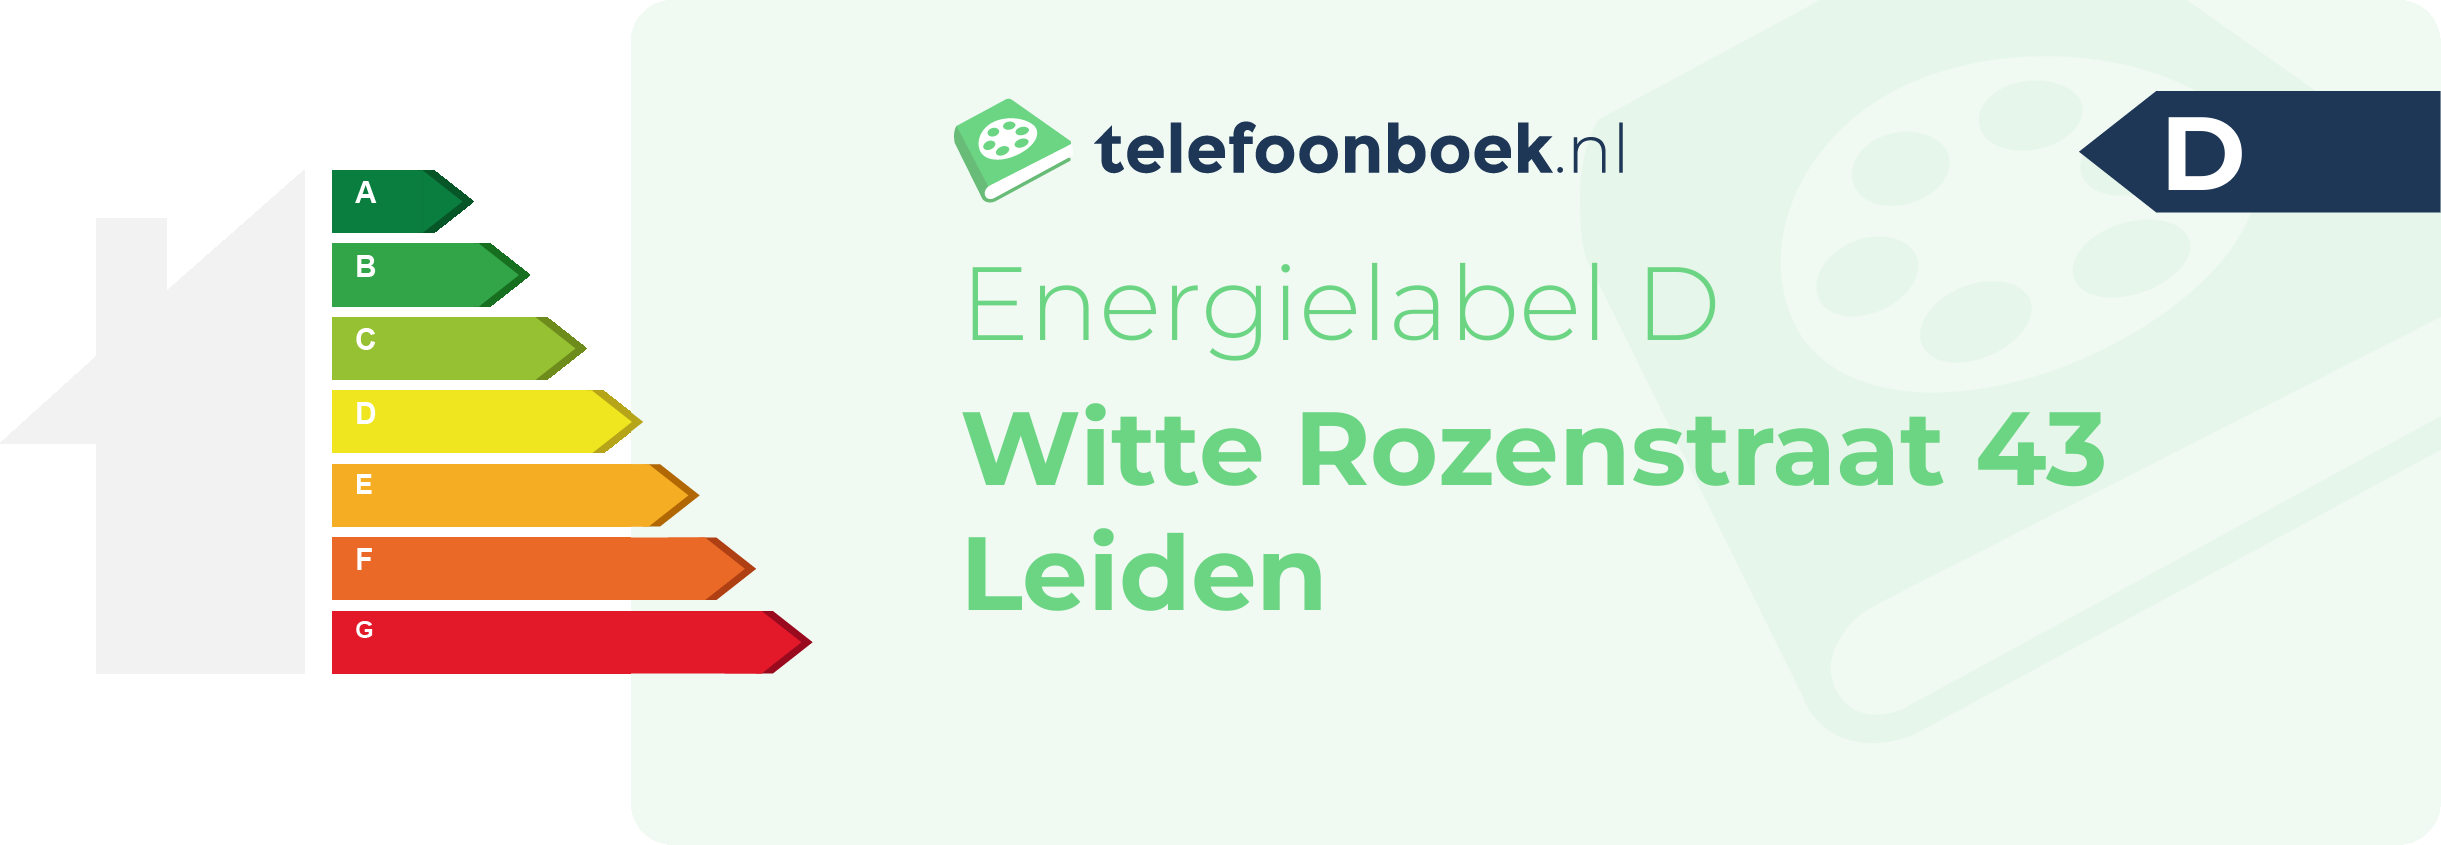 Energielabel Witte Rozenstraat 43 Leiden